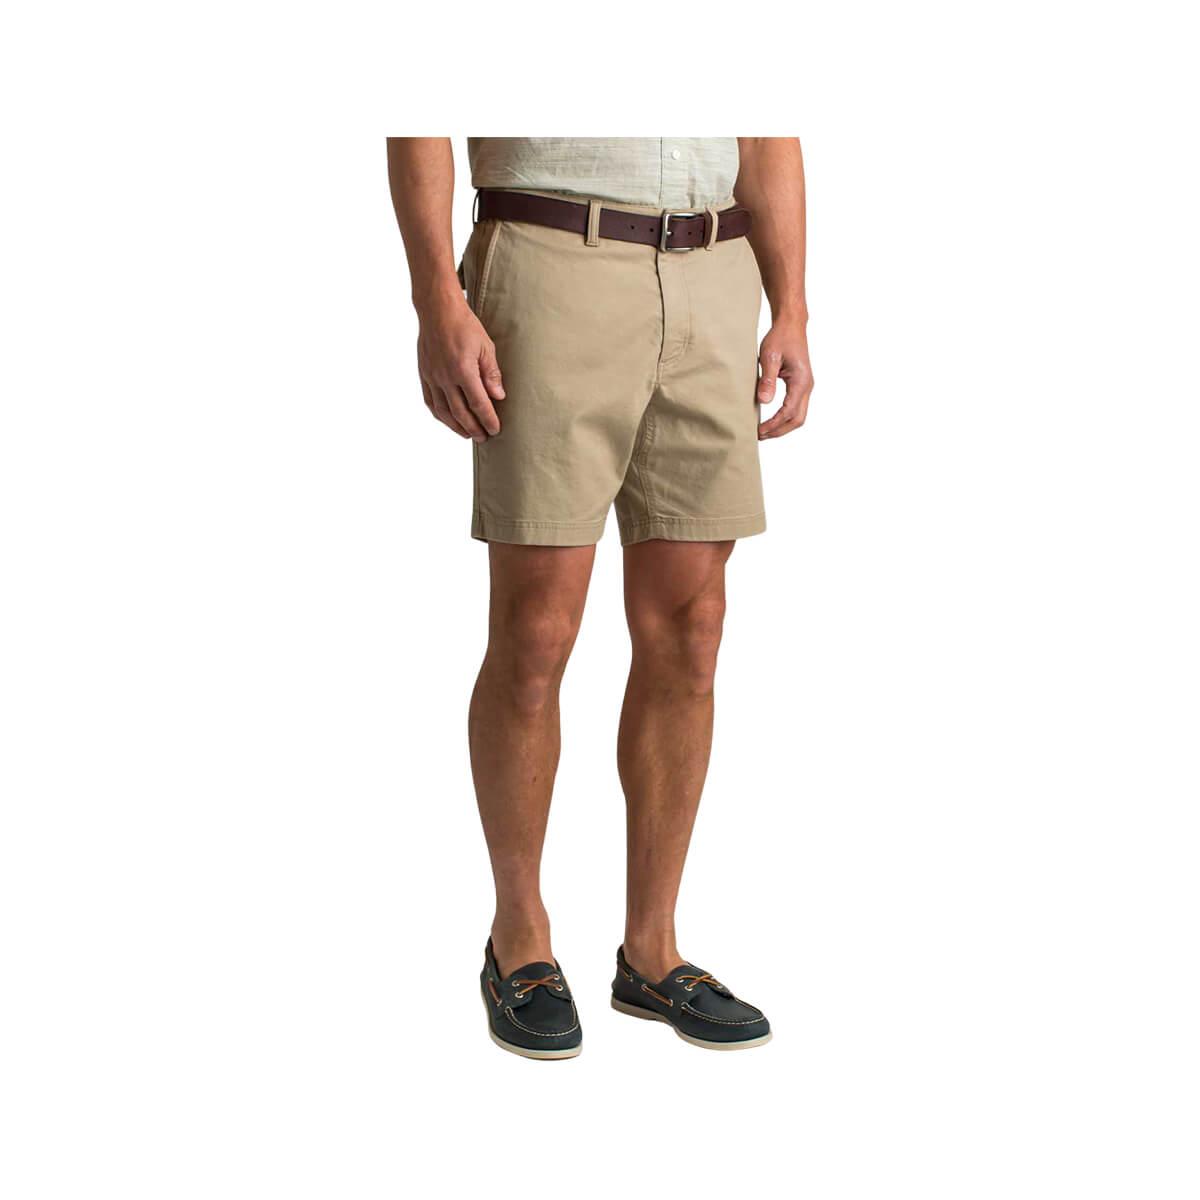  Men's Landfall Shorts - 7 Inch